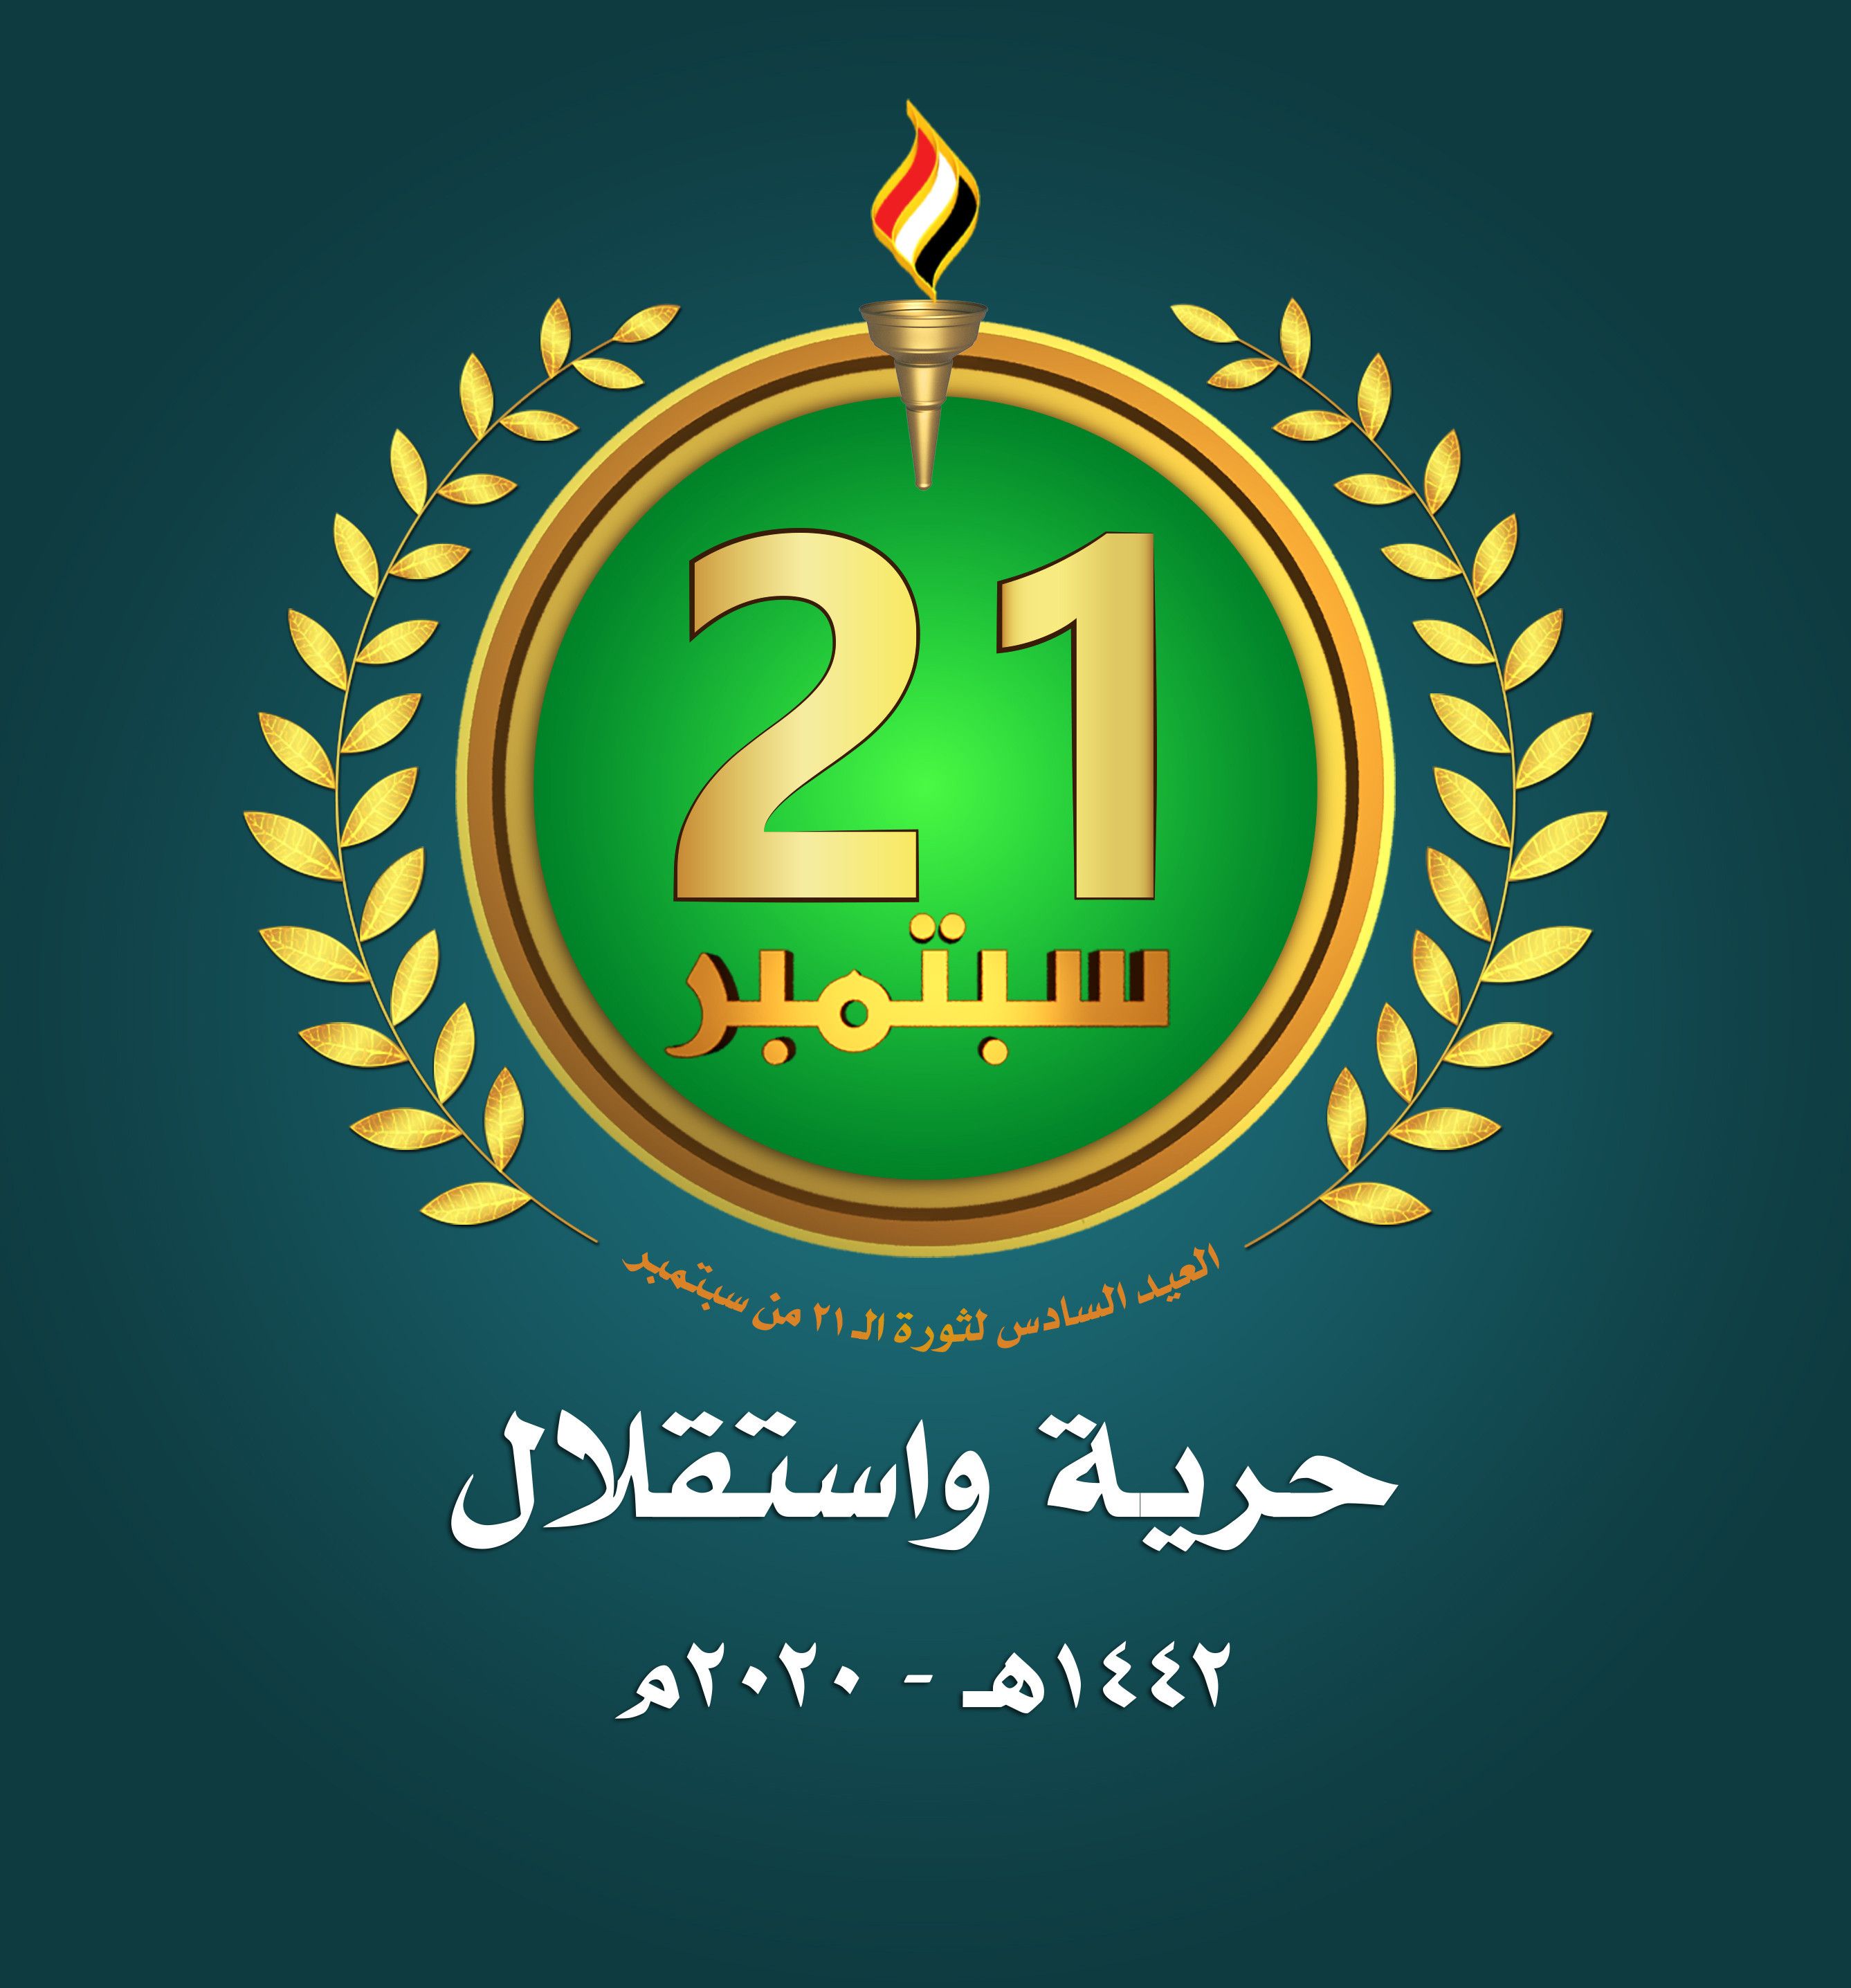 Sixth anniversary of September 21st Revolution: Achievements, Aspirations